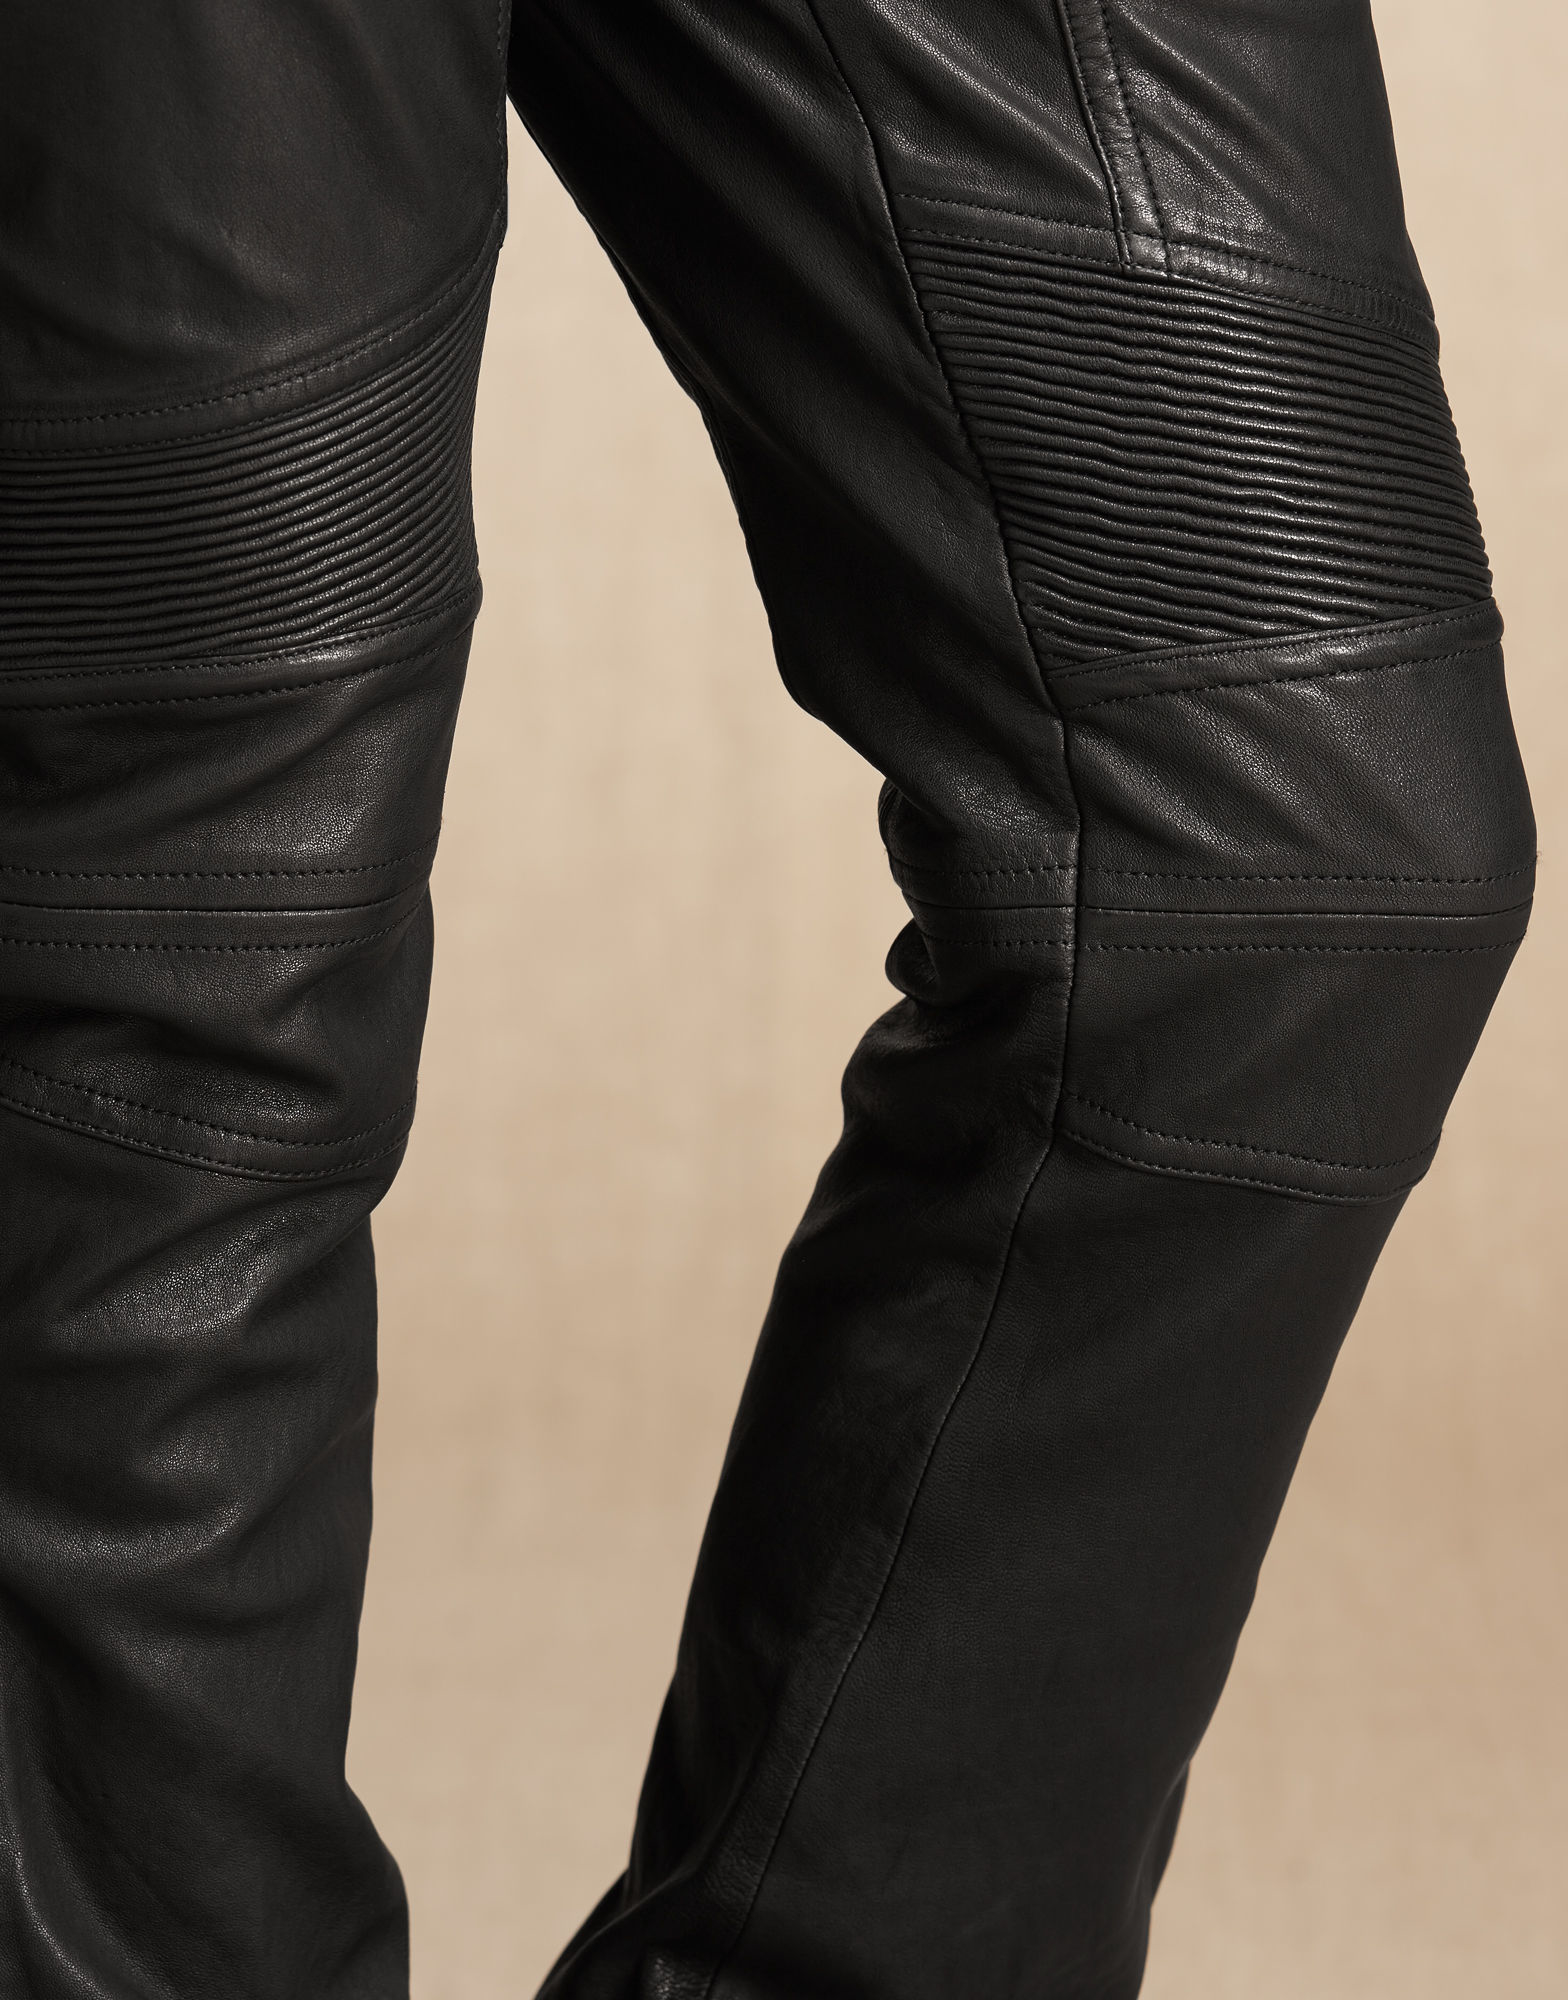 Lyst - Belstaff Westmore Trousers in Black for Men